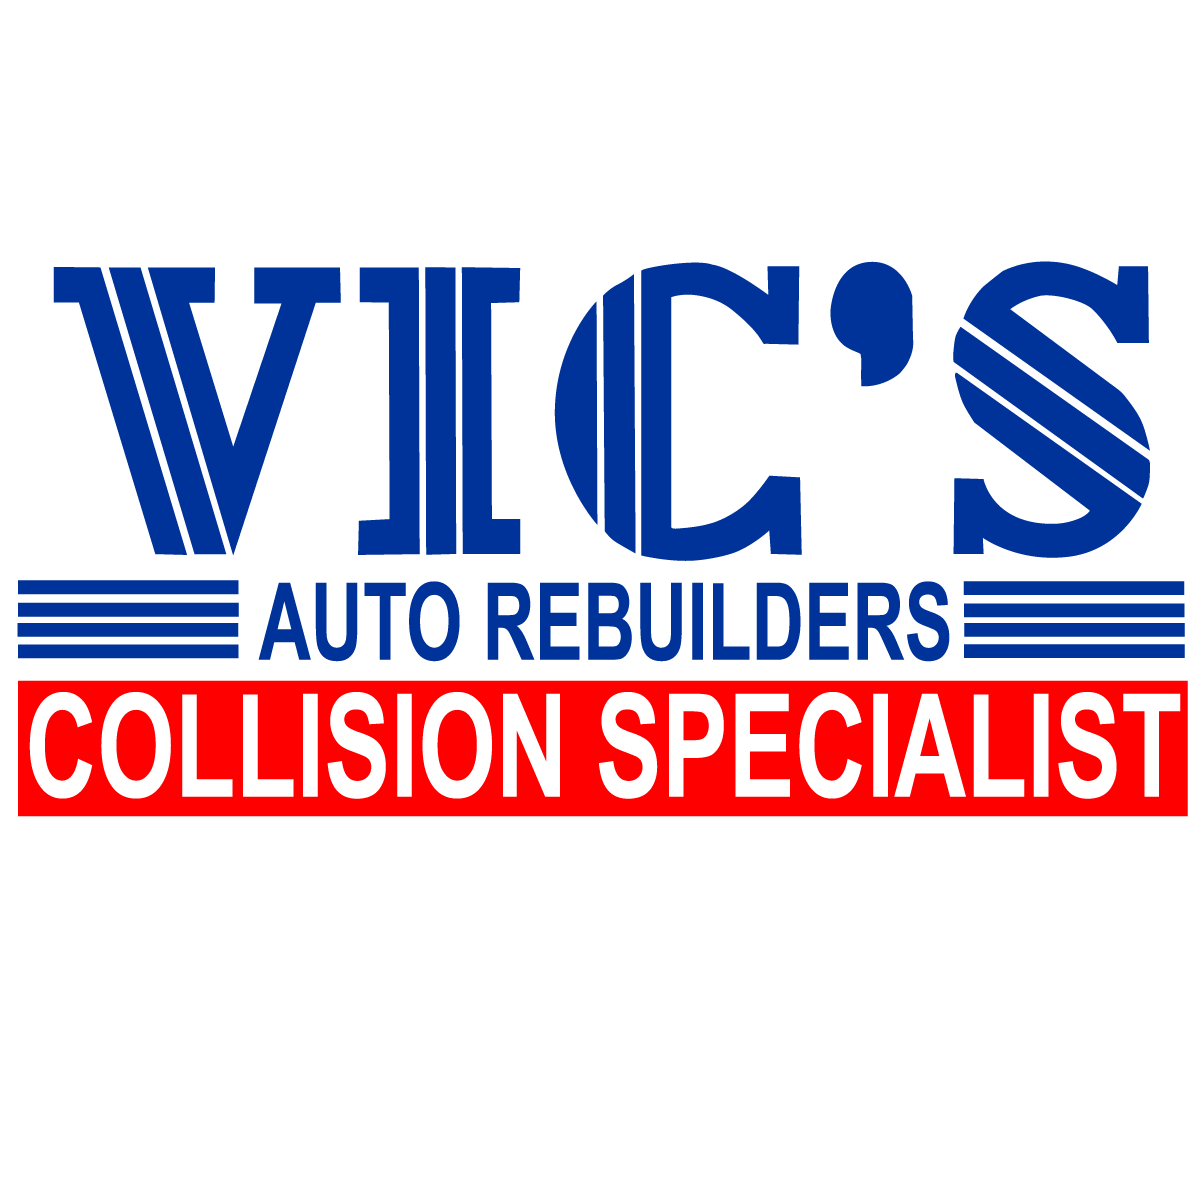 Vic's Auto Rebuilders Logo